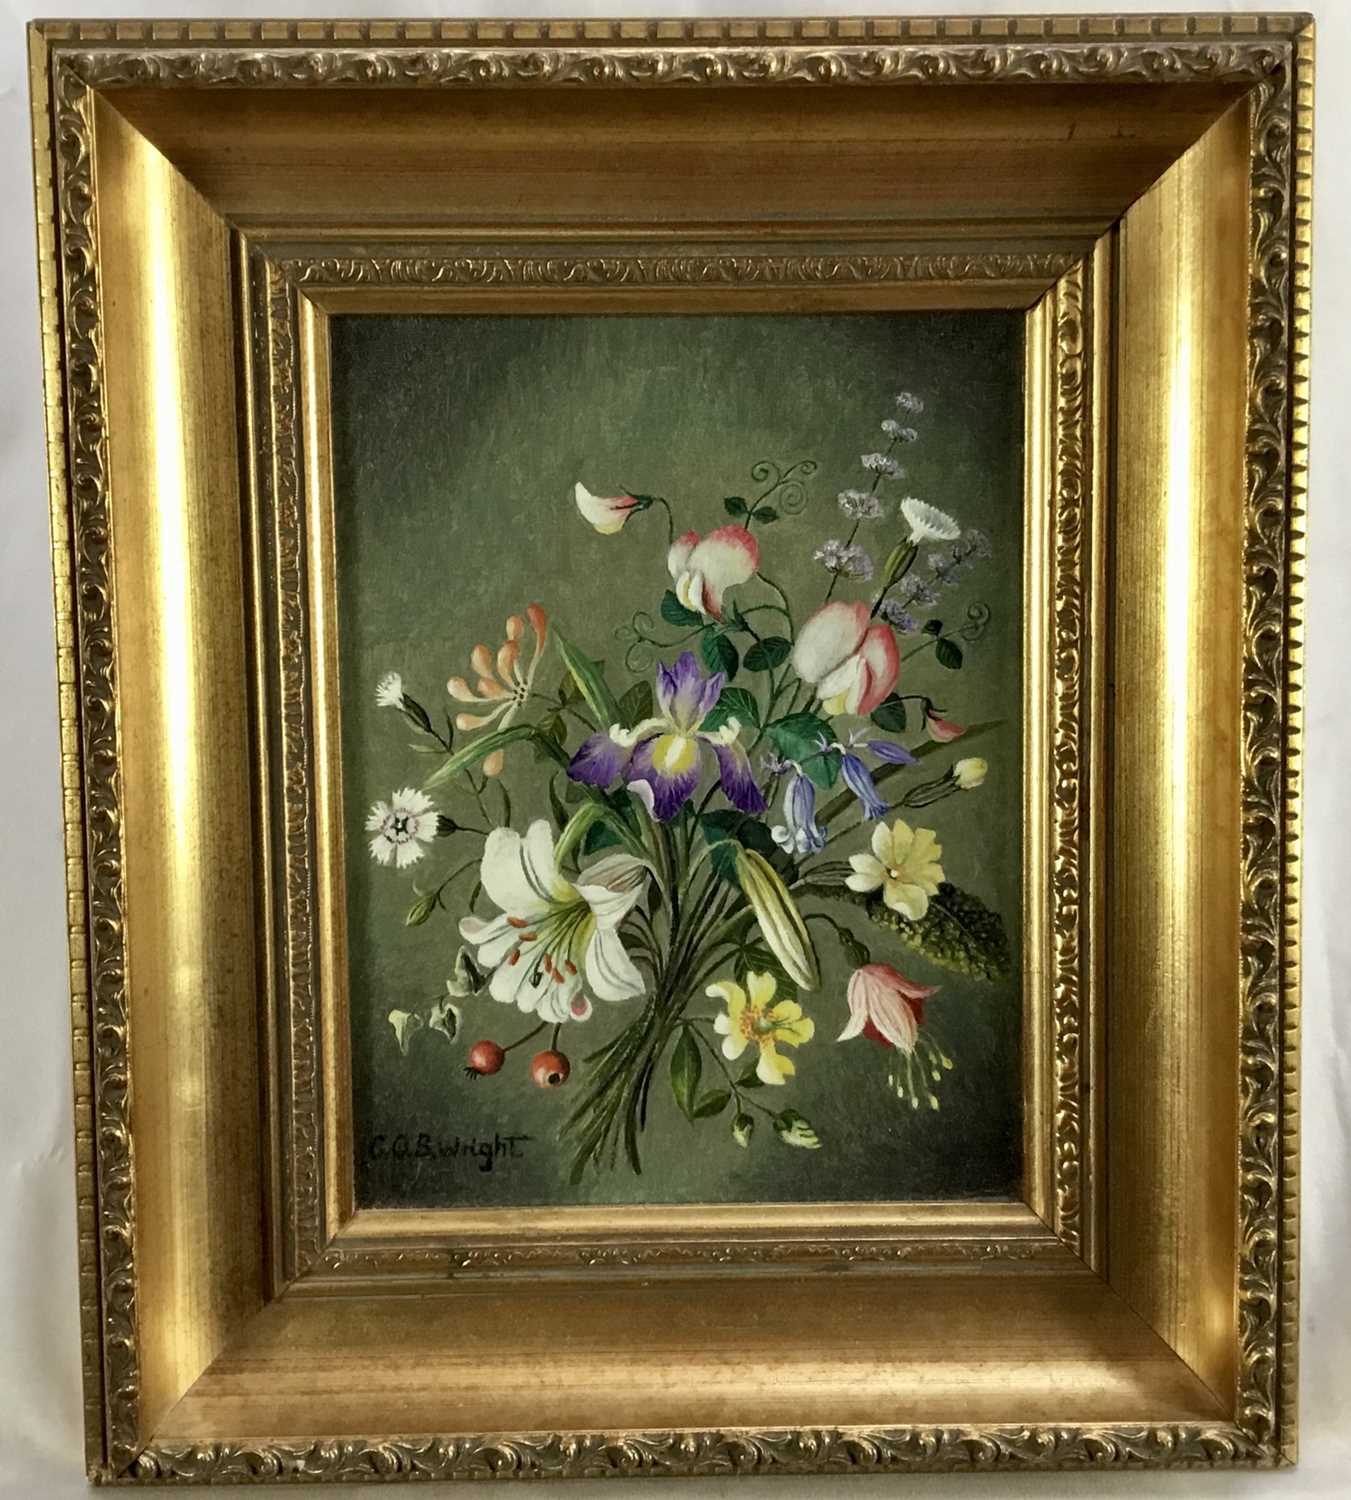 Lot 39 - C. O. B. Wright, 20th century oil on canvas board - still life summer flowers, in gilt frame